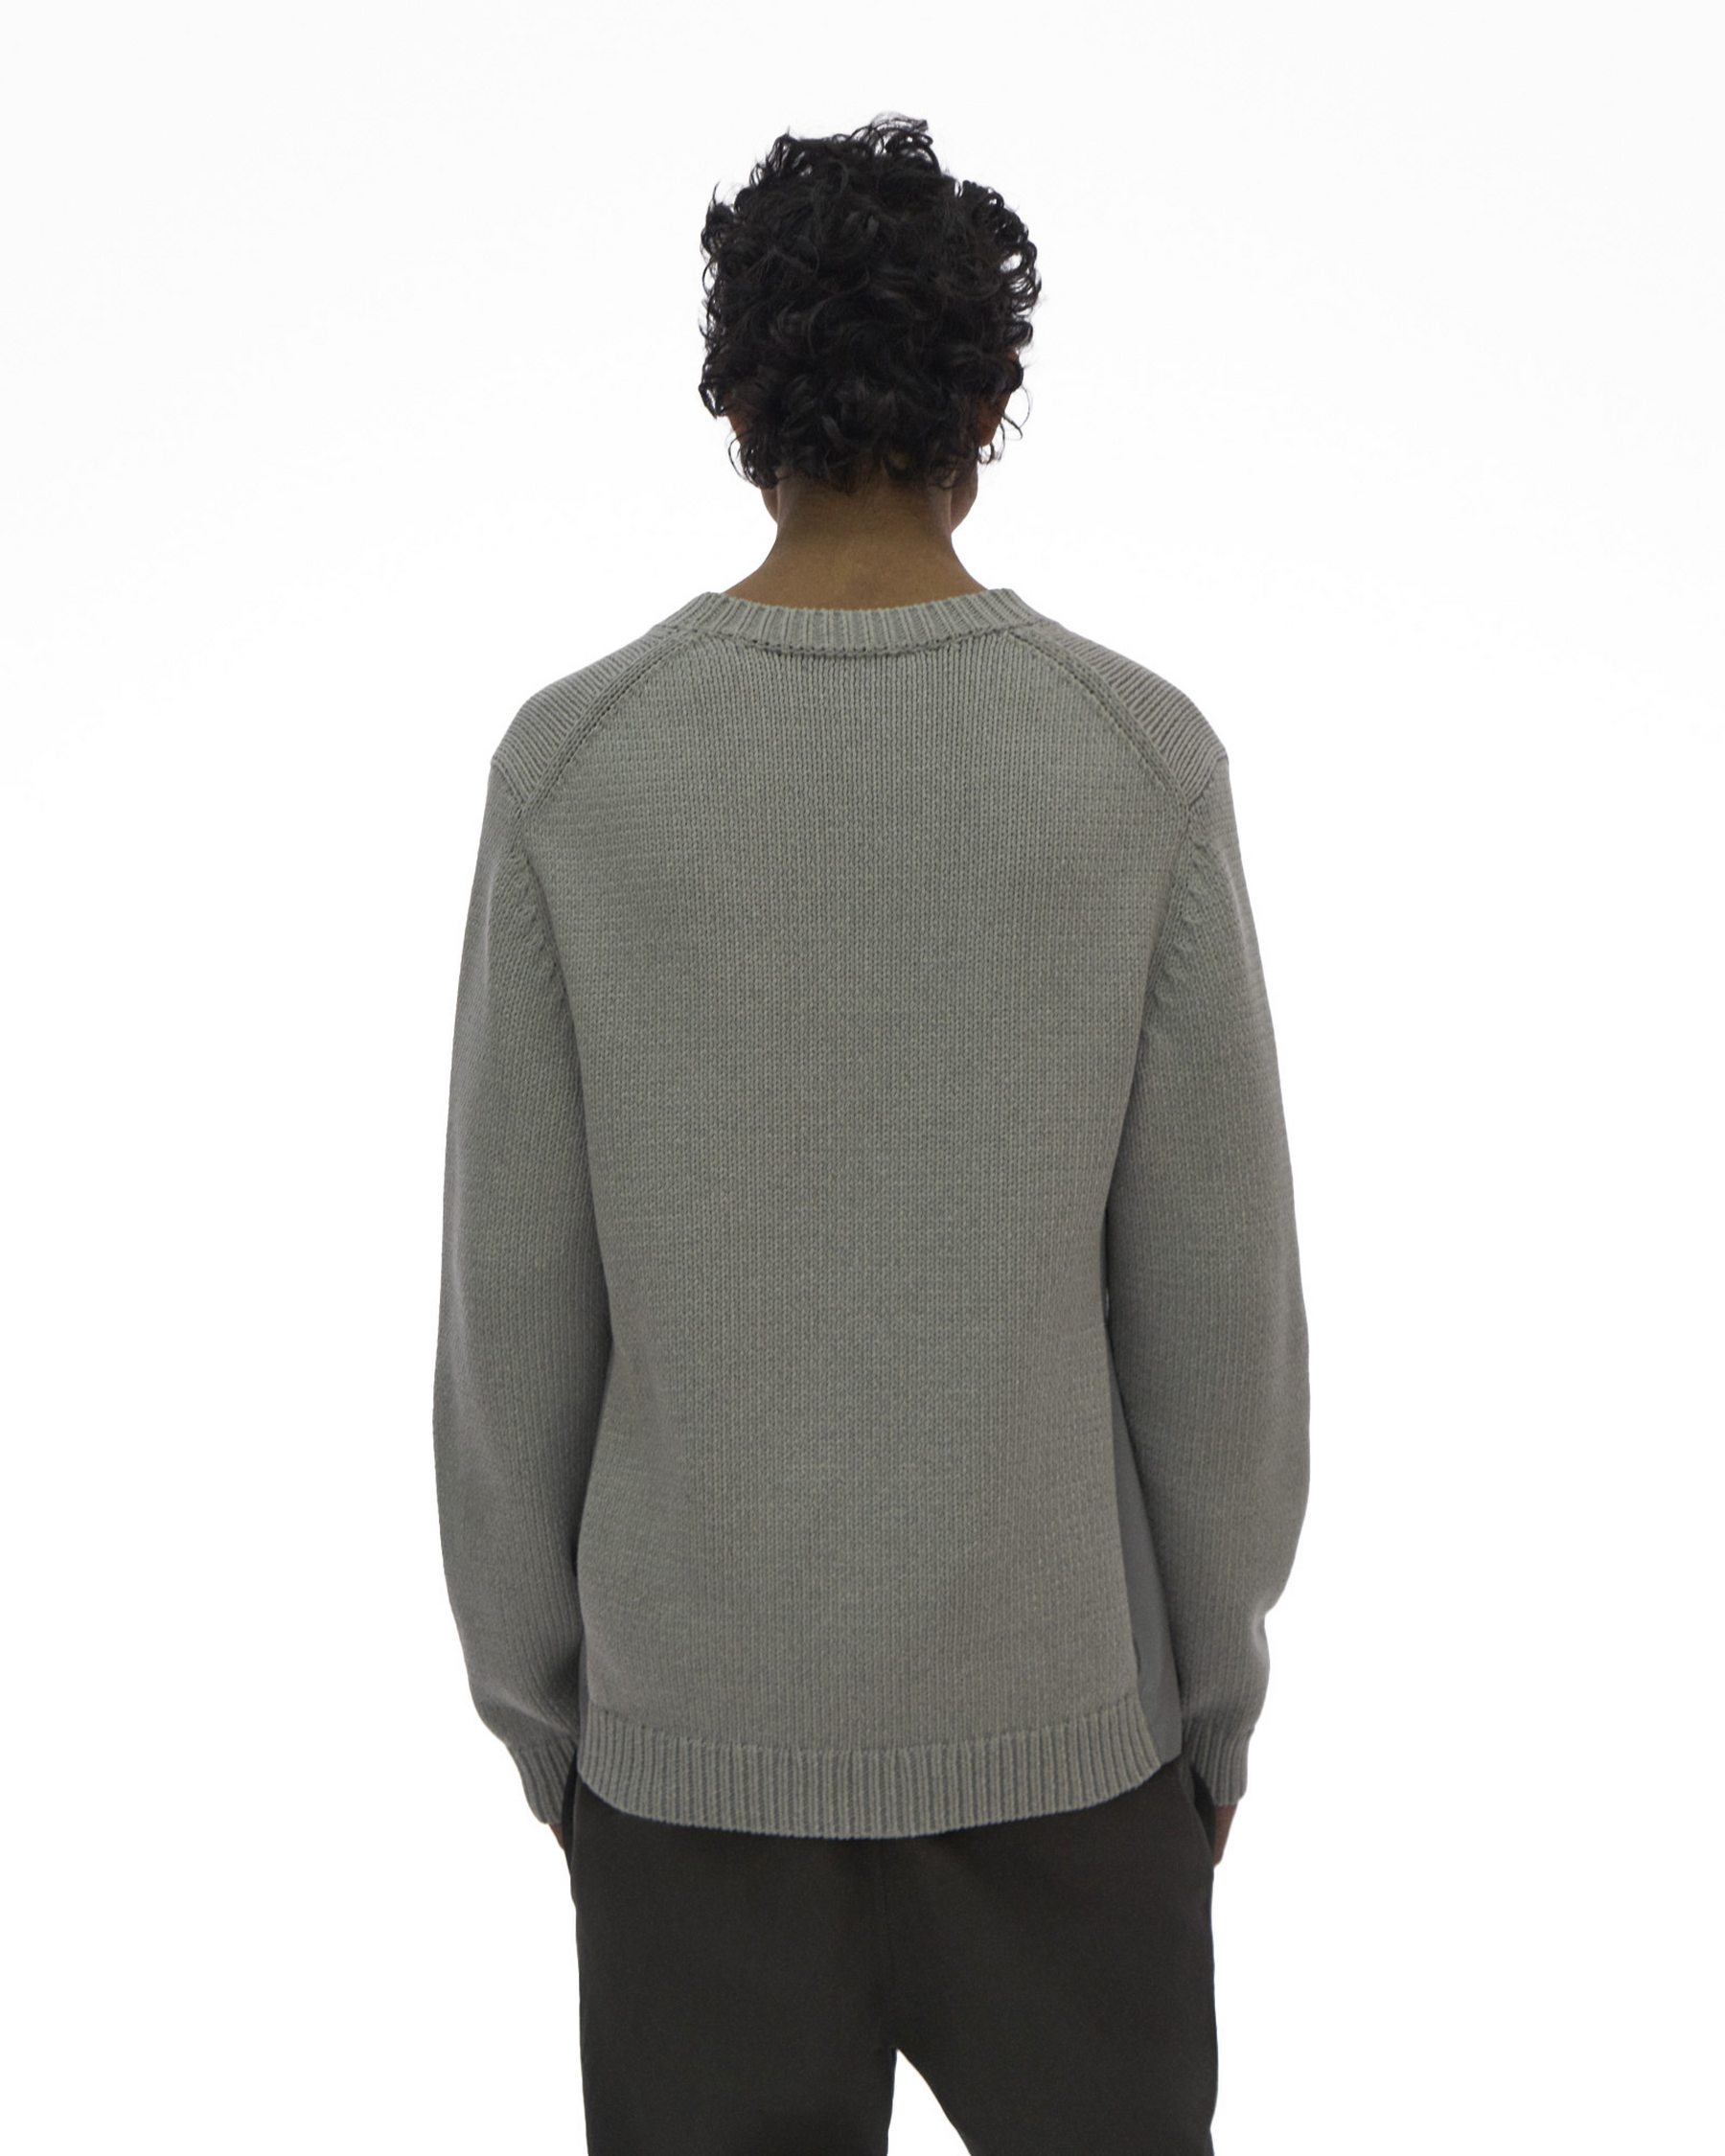 Reflective Panel Sweater